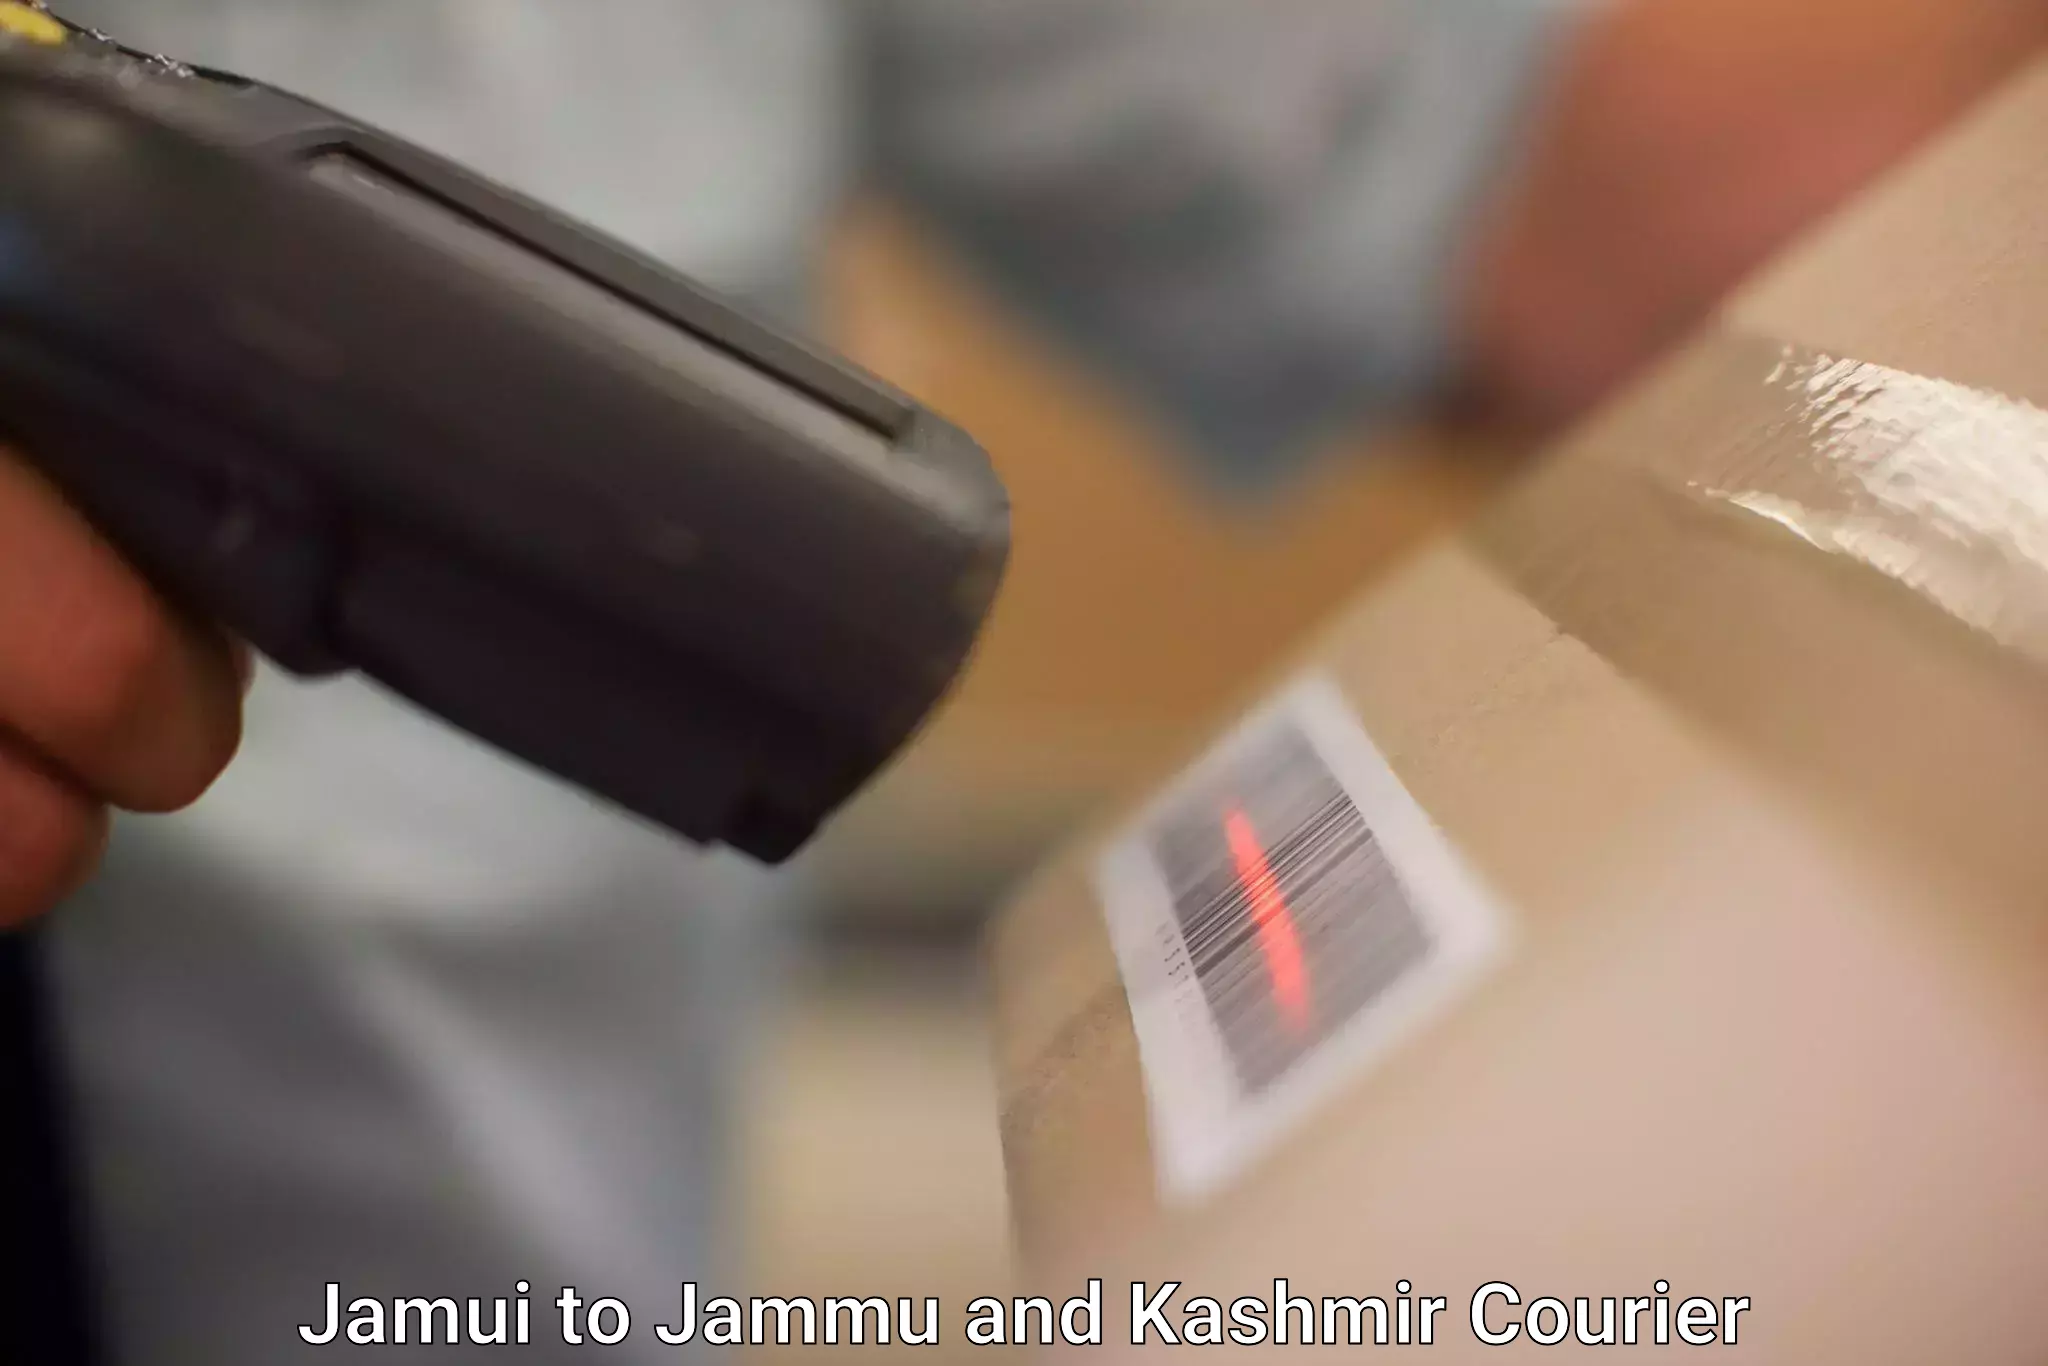 High-performance logistics Jamui to Jammu and Kashmir